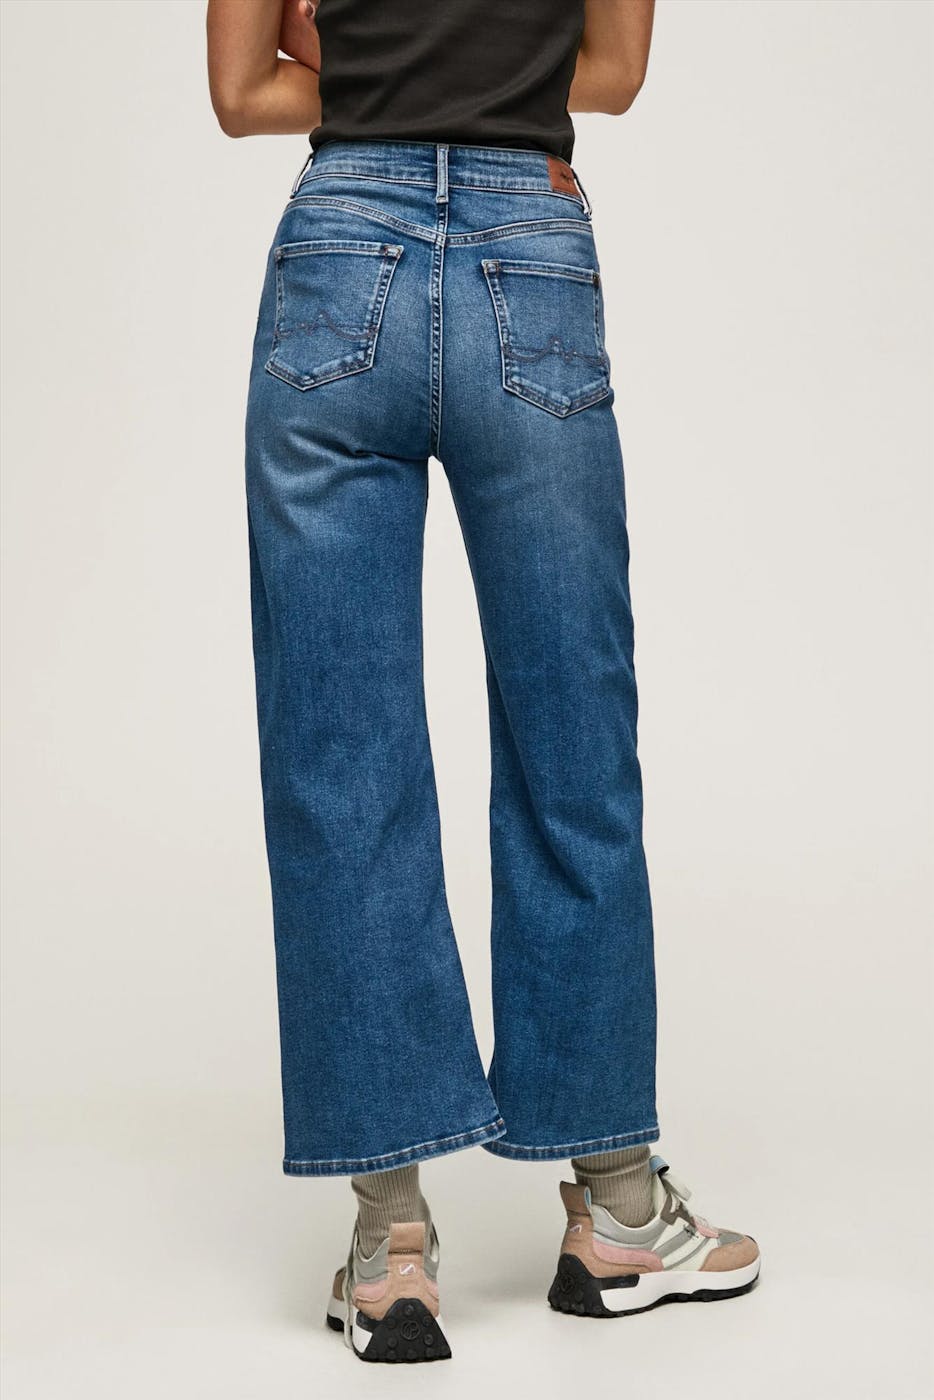 Pepe Jeans London - Blauwe Lexa Sky High jeans